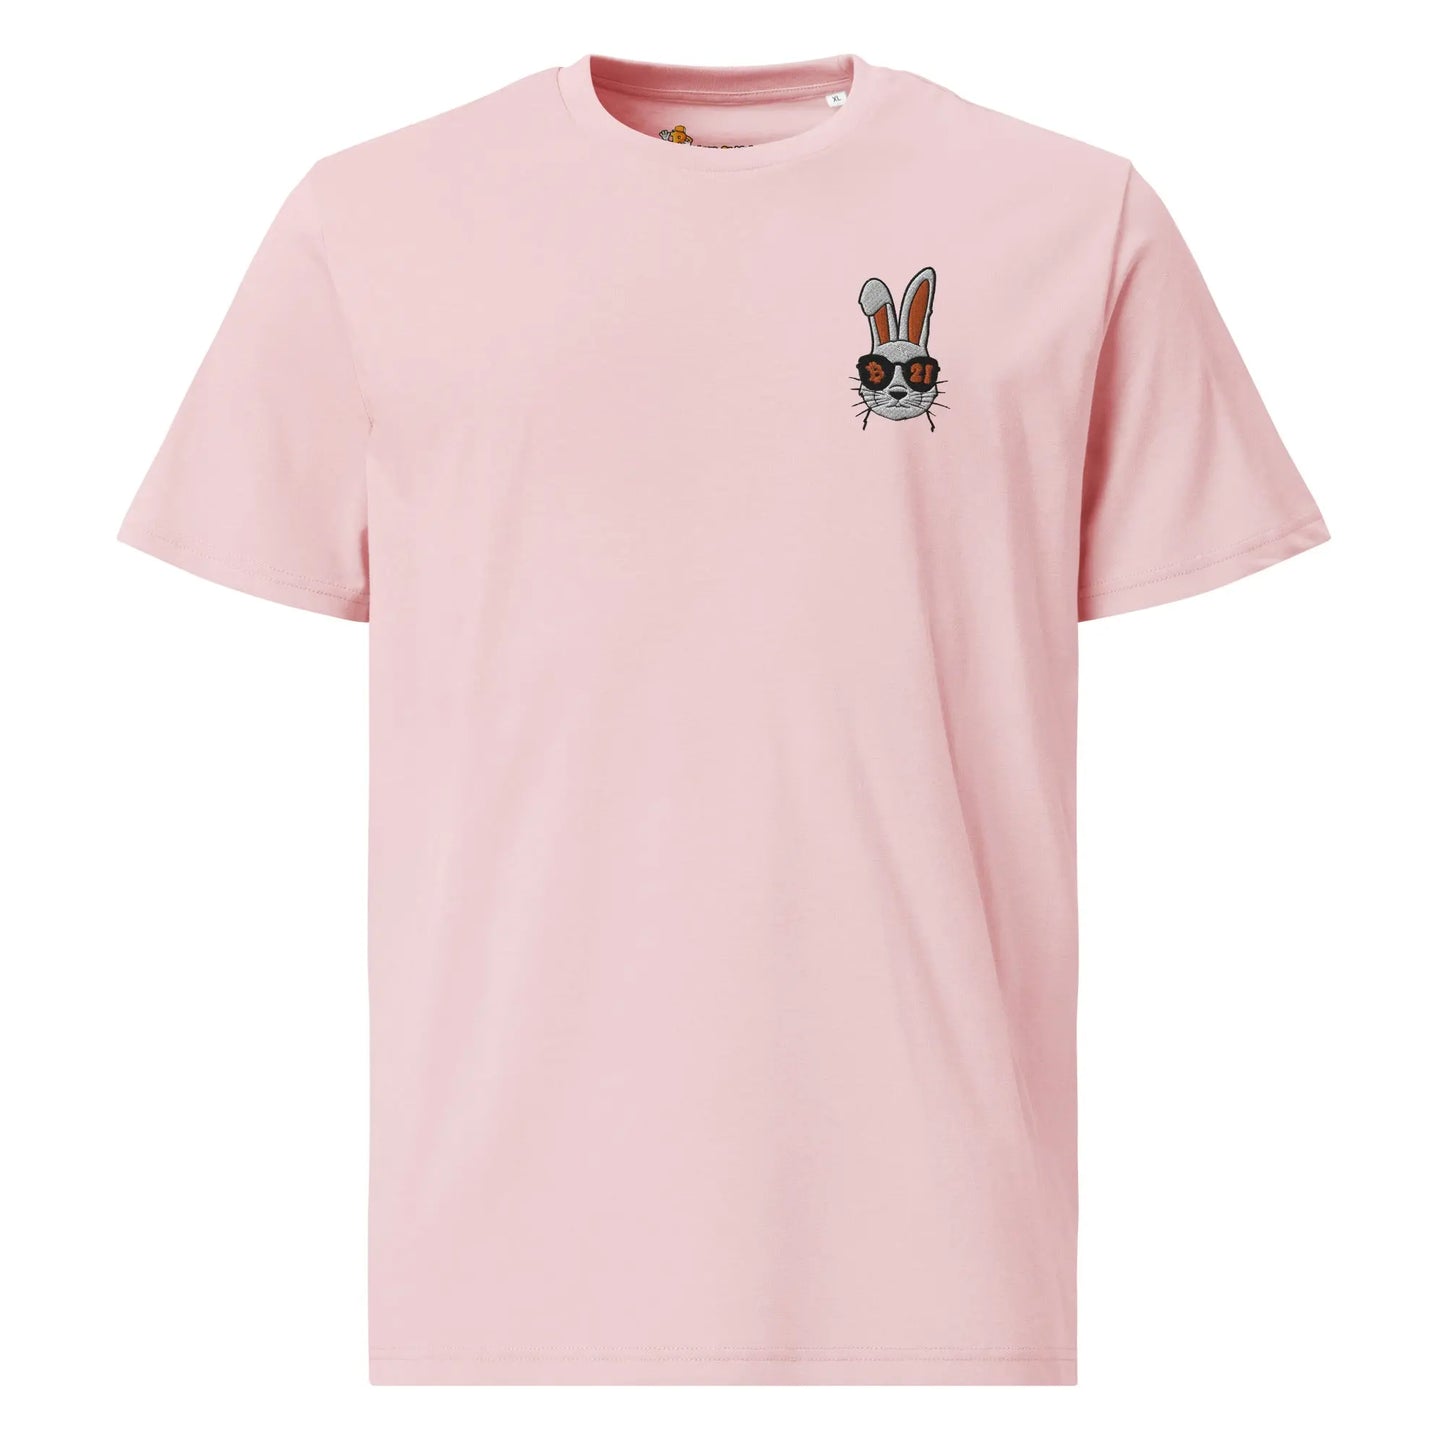 Rabbit 21 - Premium Embroidered Unisex Organic Cotton Bitcoin T-shirt Pink Color